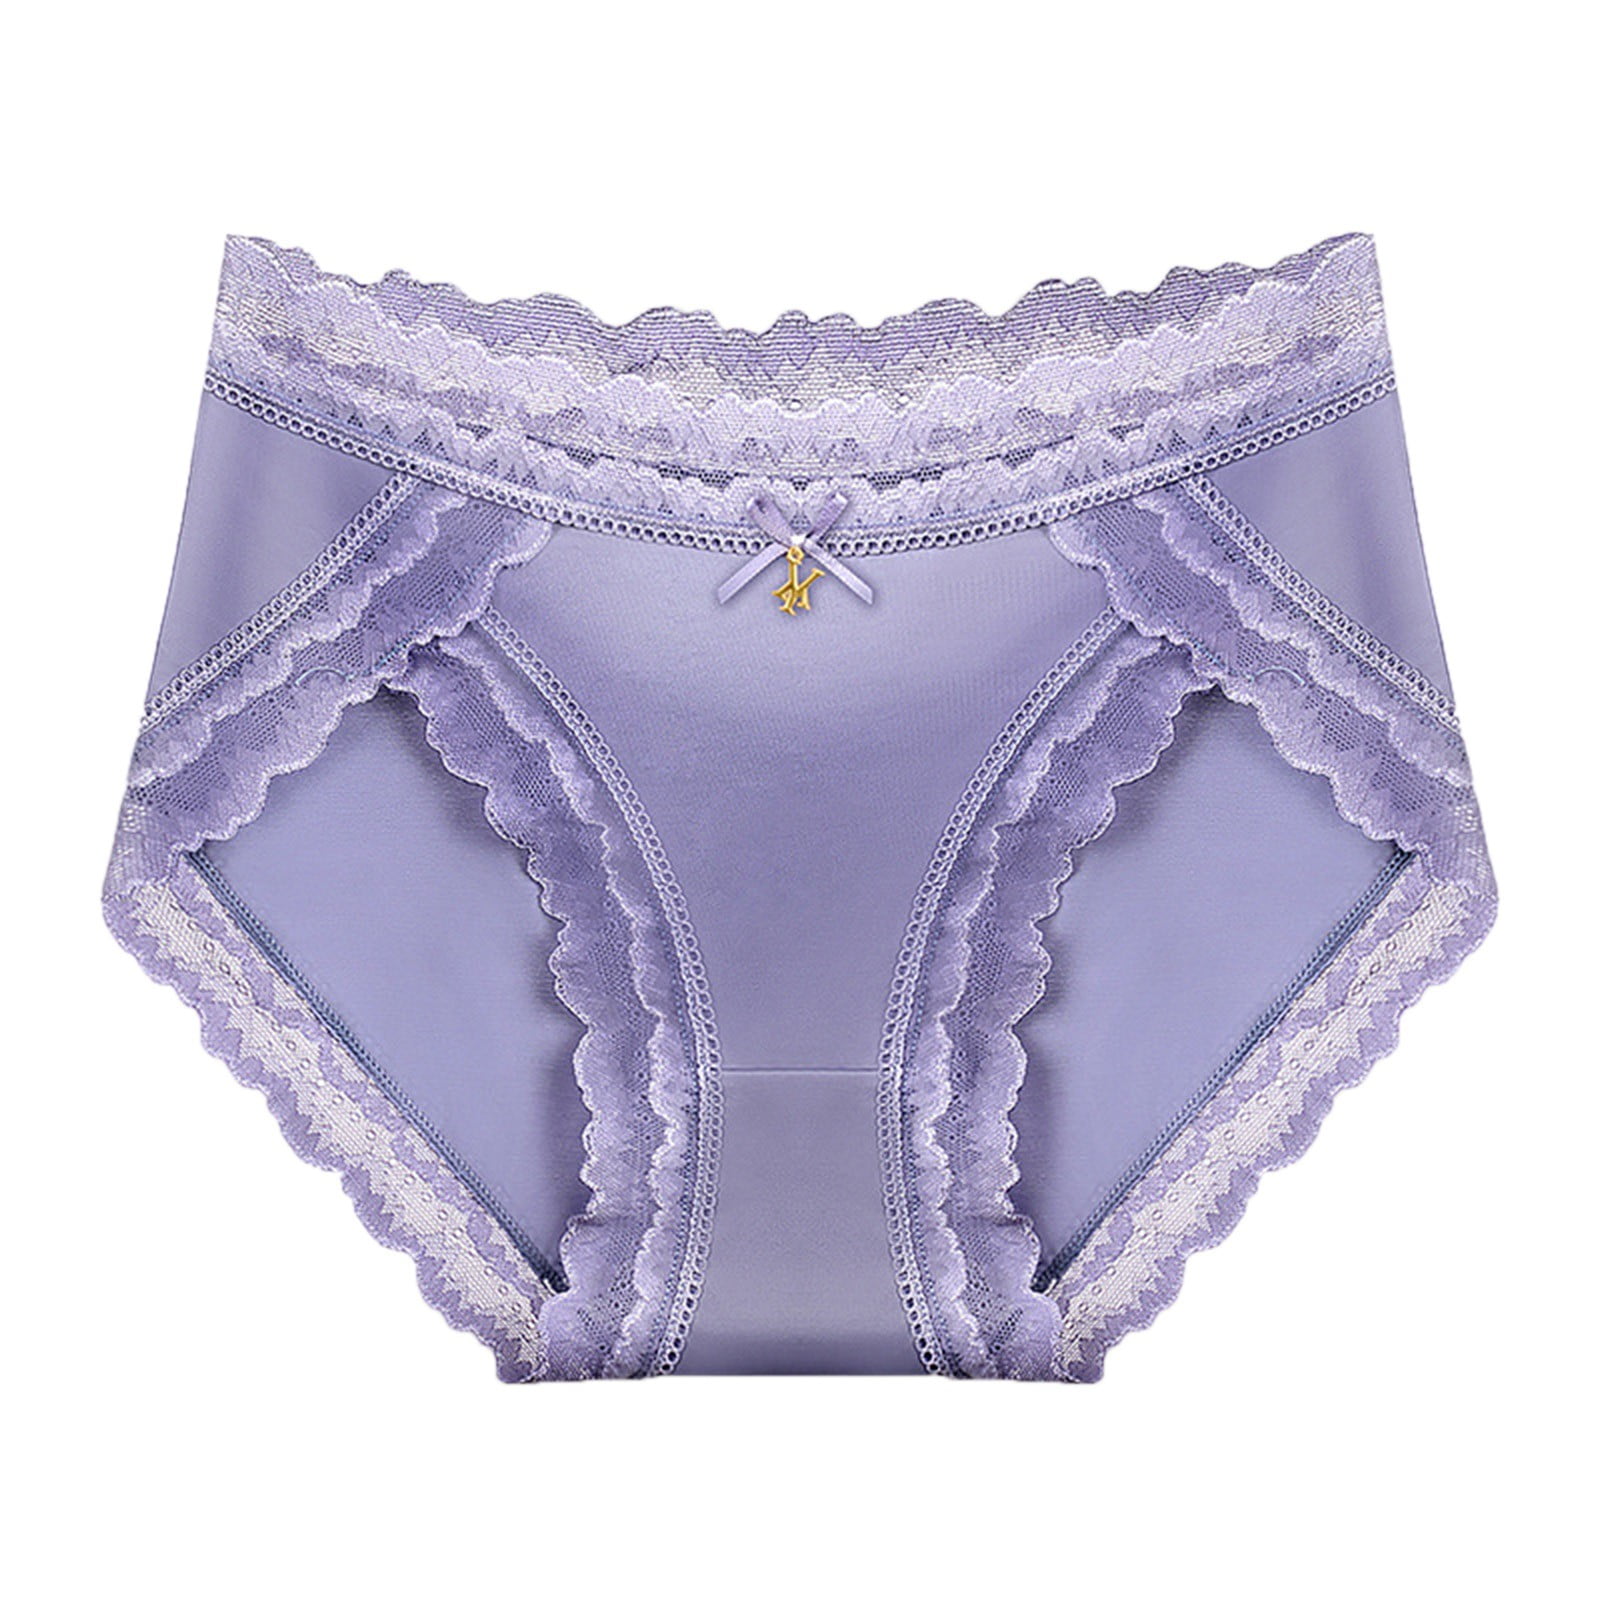 adviicd Cotton Panties Womens Nylon Brief Pink Medium